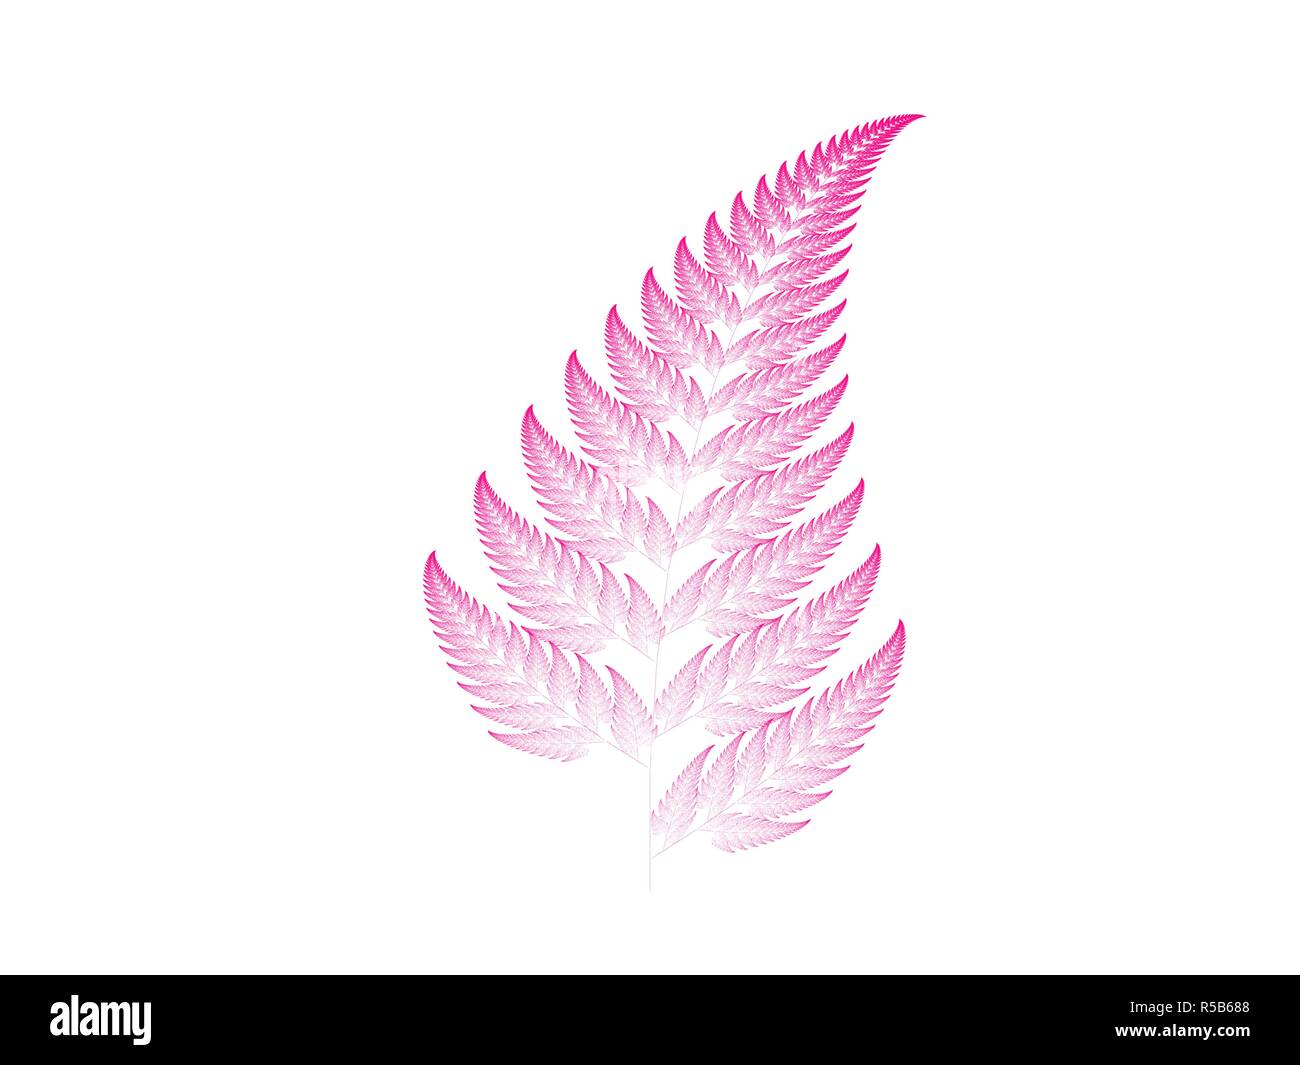 Pink fractal background Stock Photo